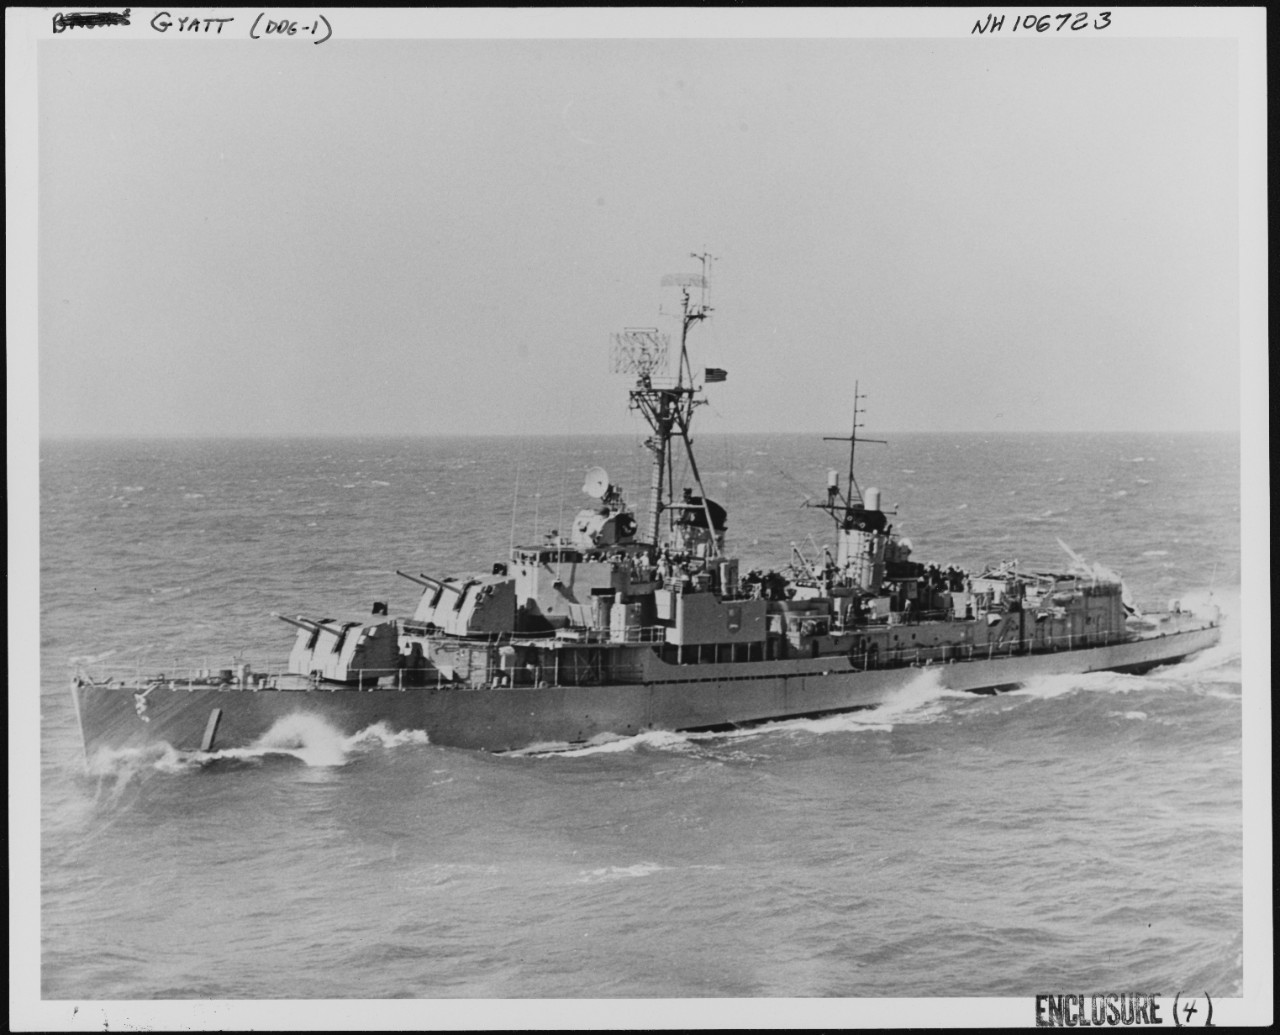 Photo # NH 106723  USS Gyatt